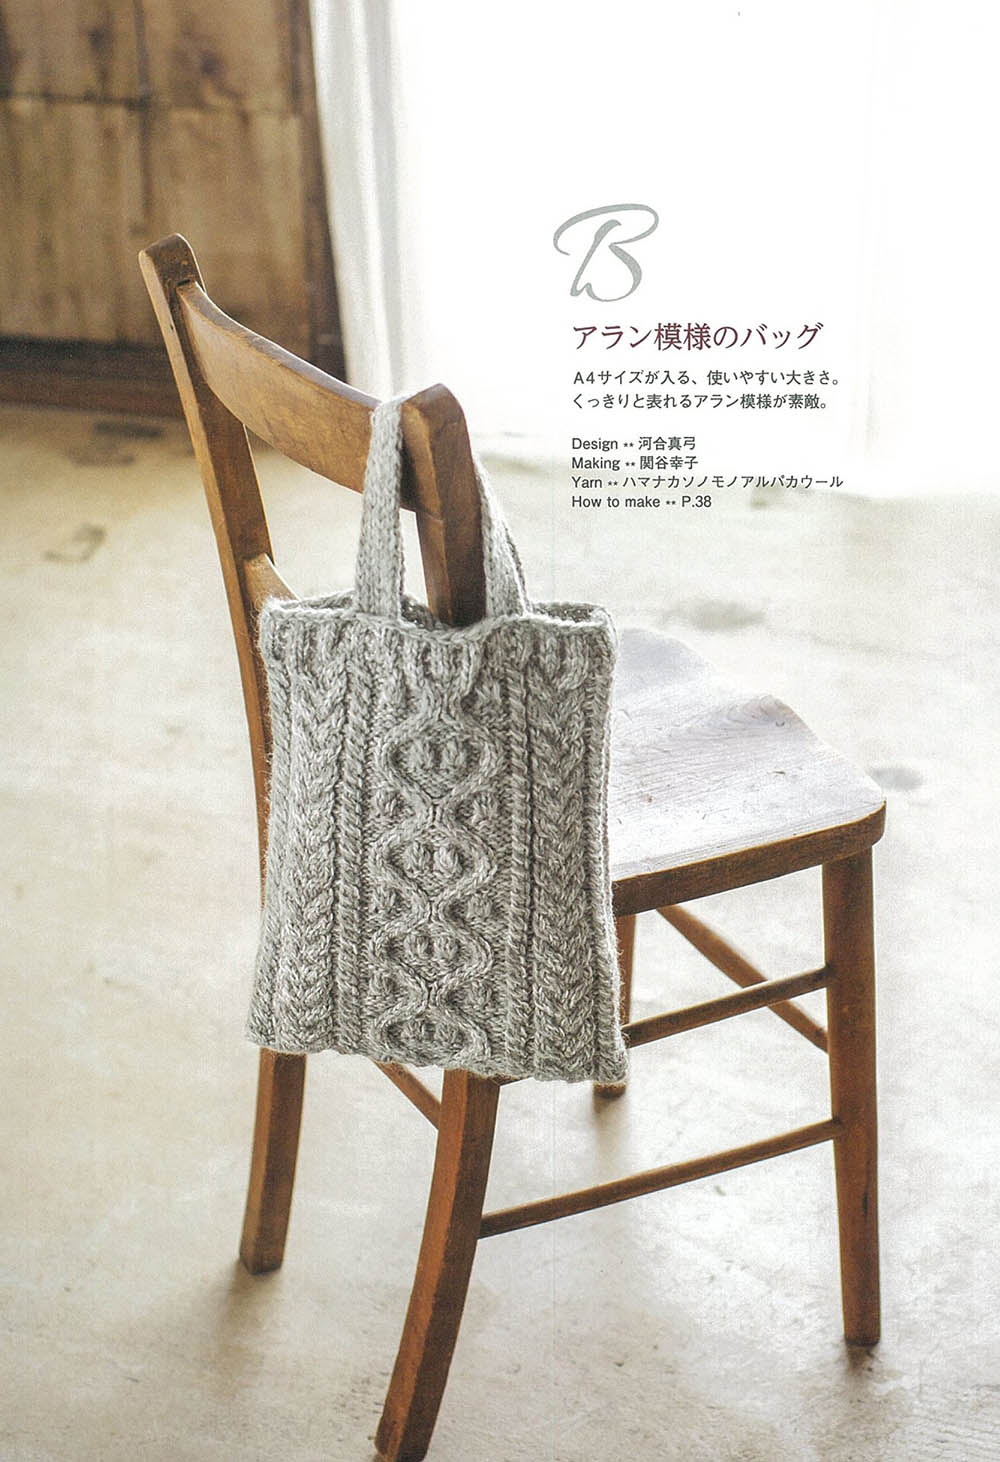 Natural knit book in natural materials